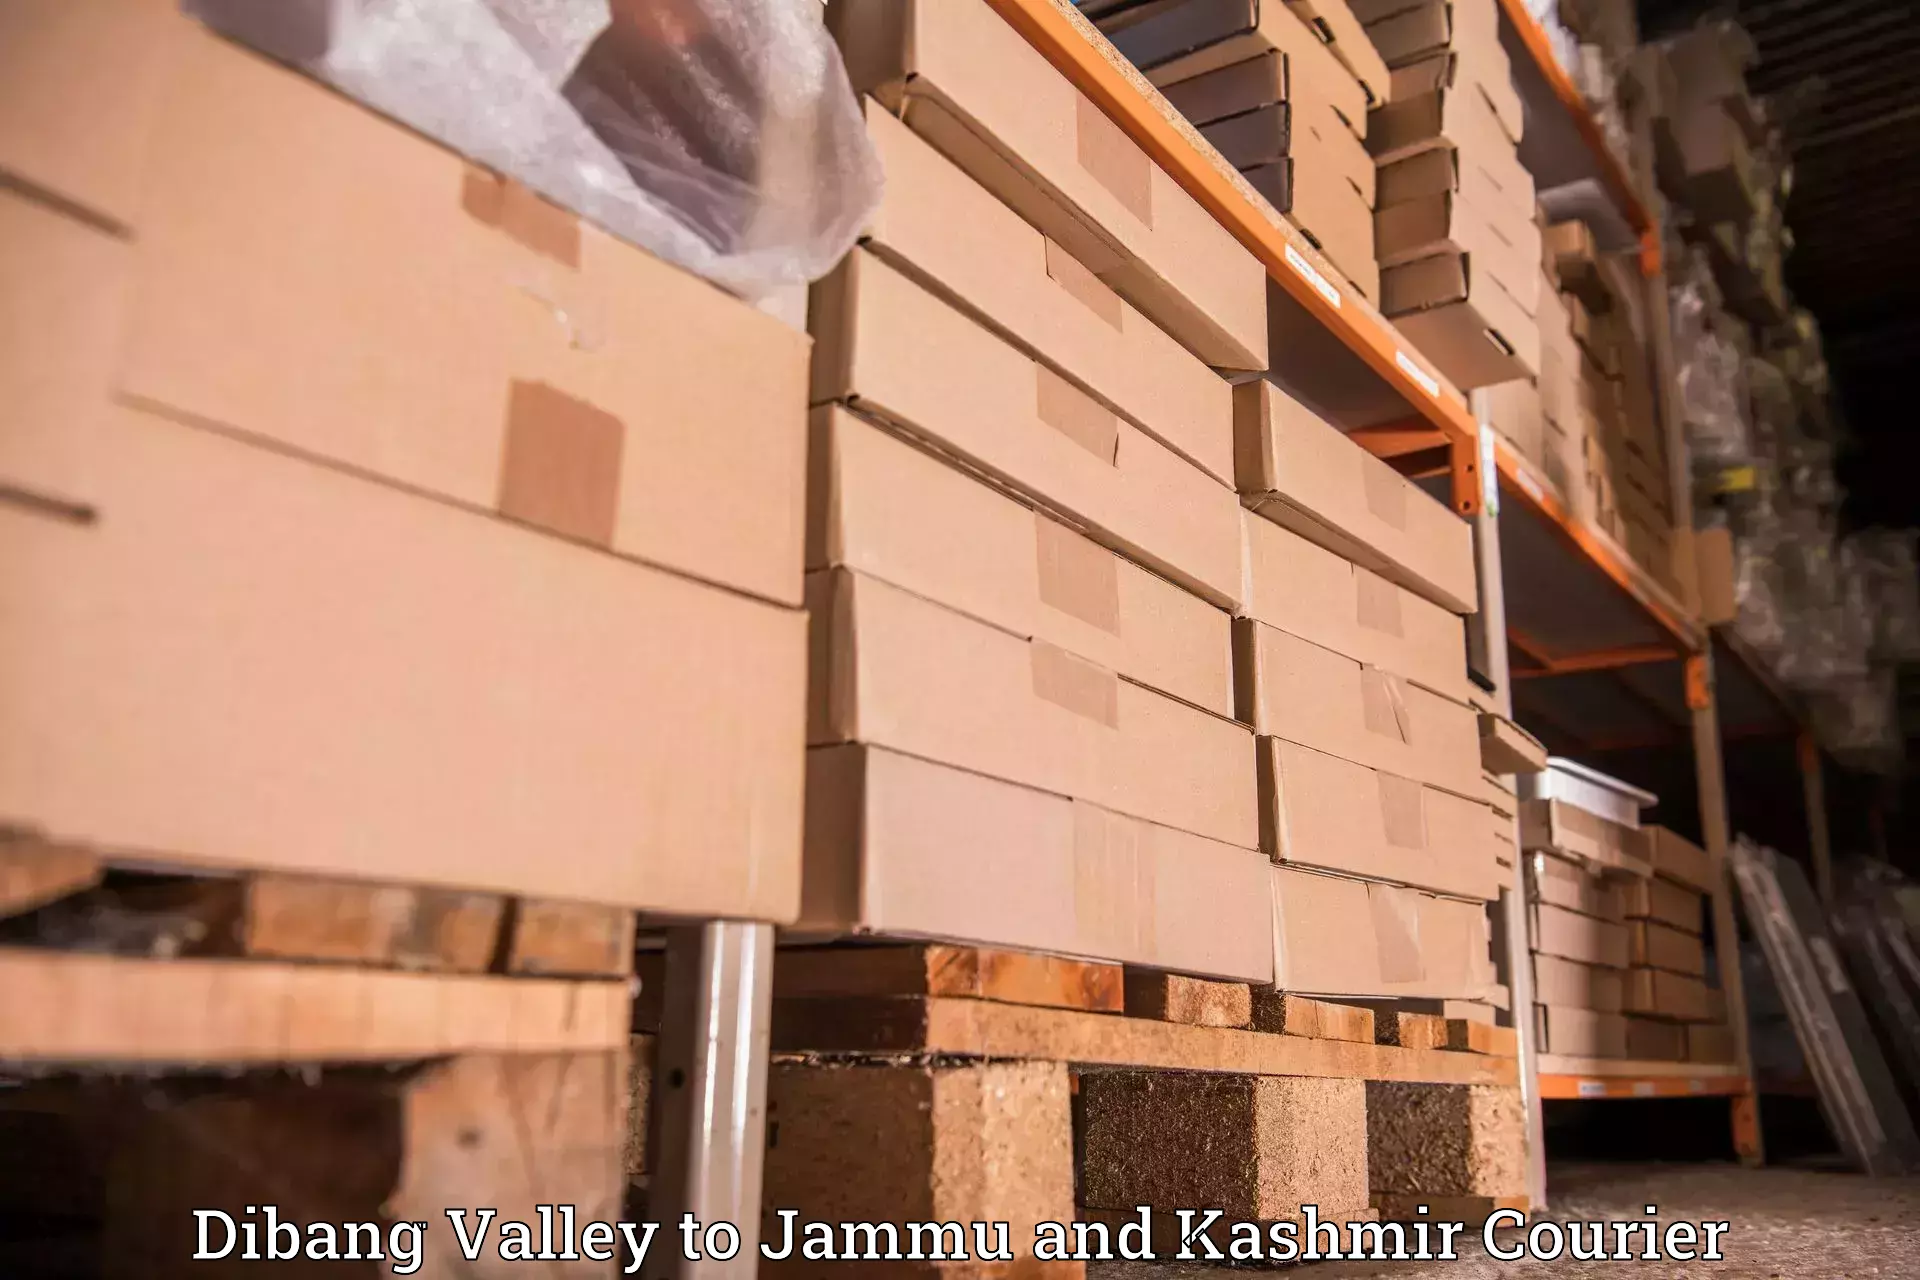 Courier service comparison Dibang Valley to Kupwara